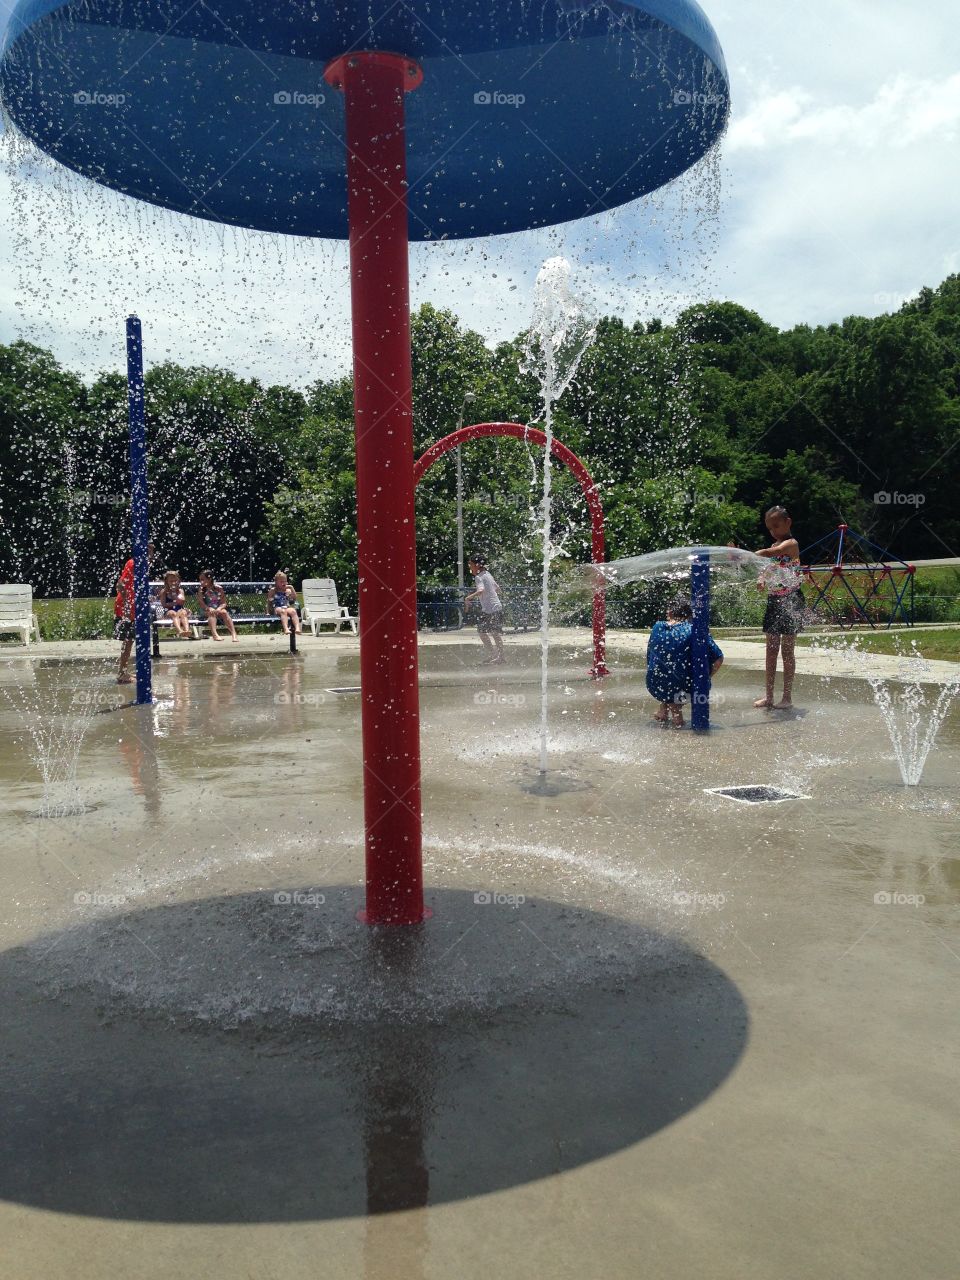 Fun at the water park